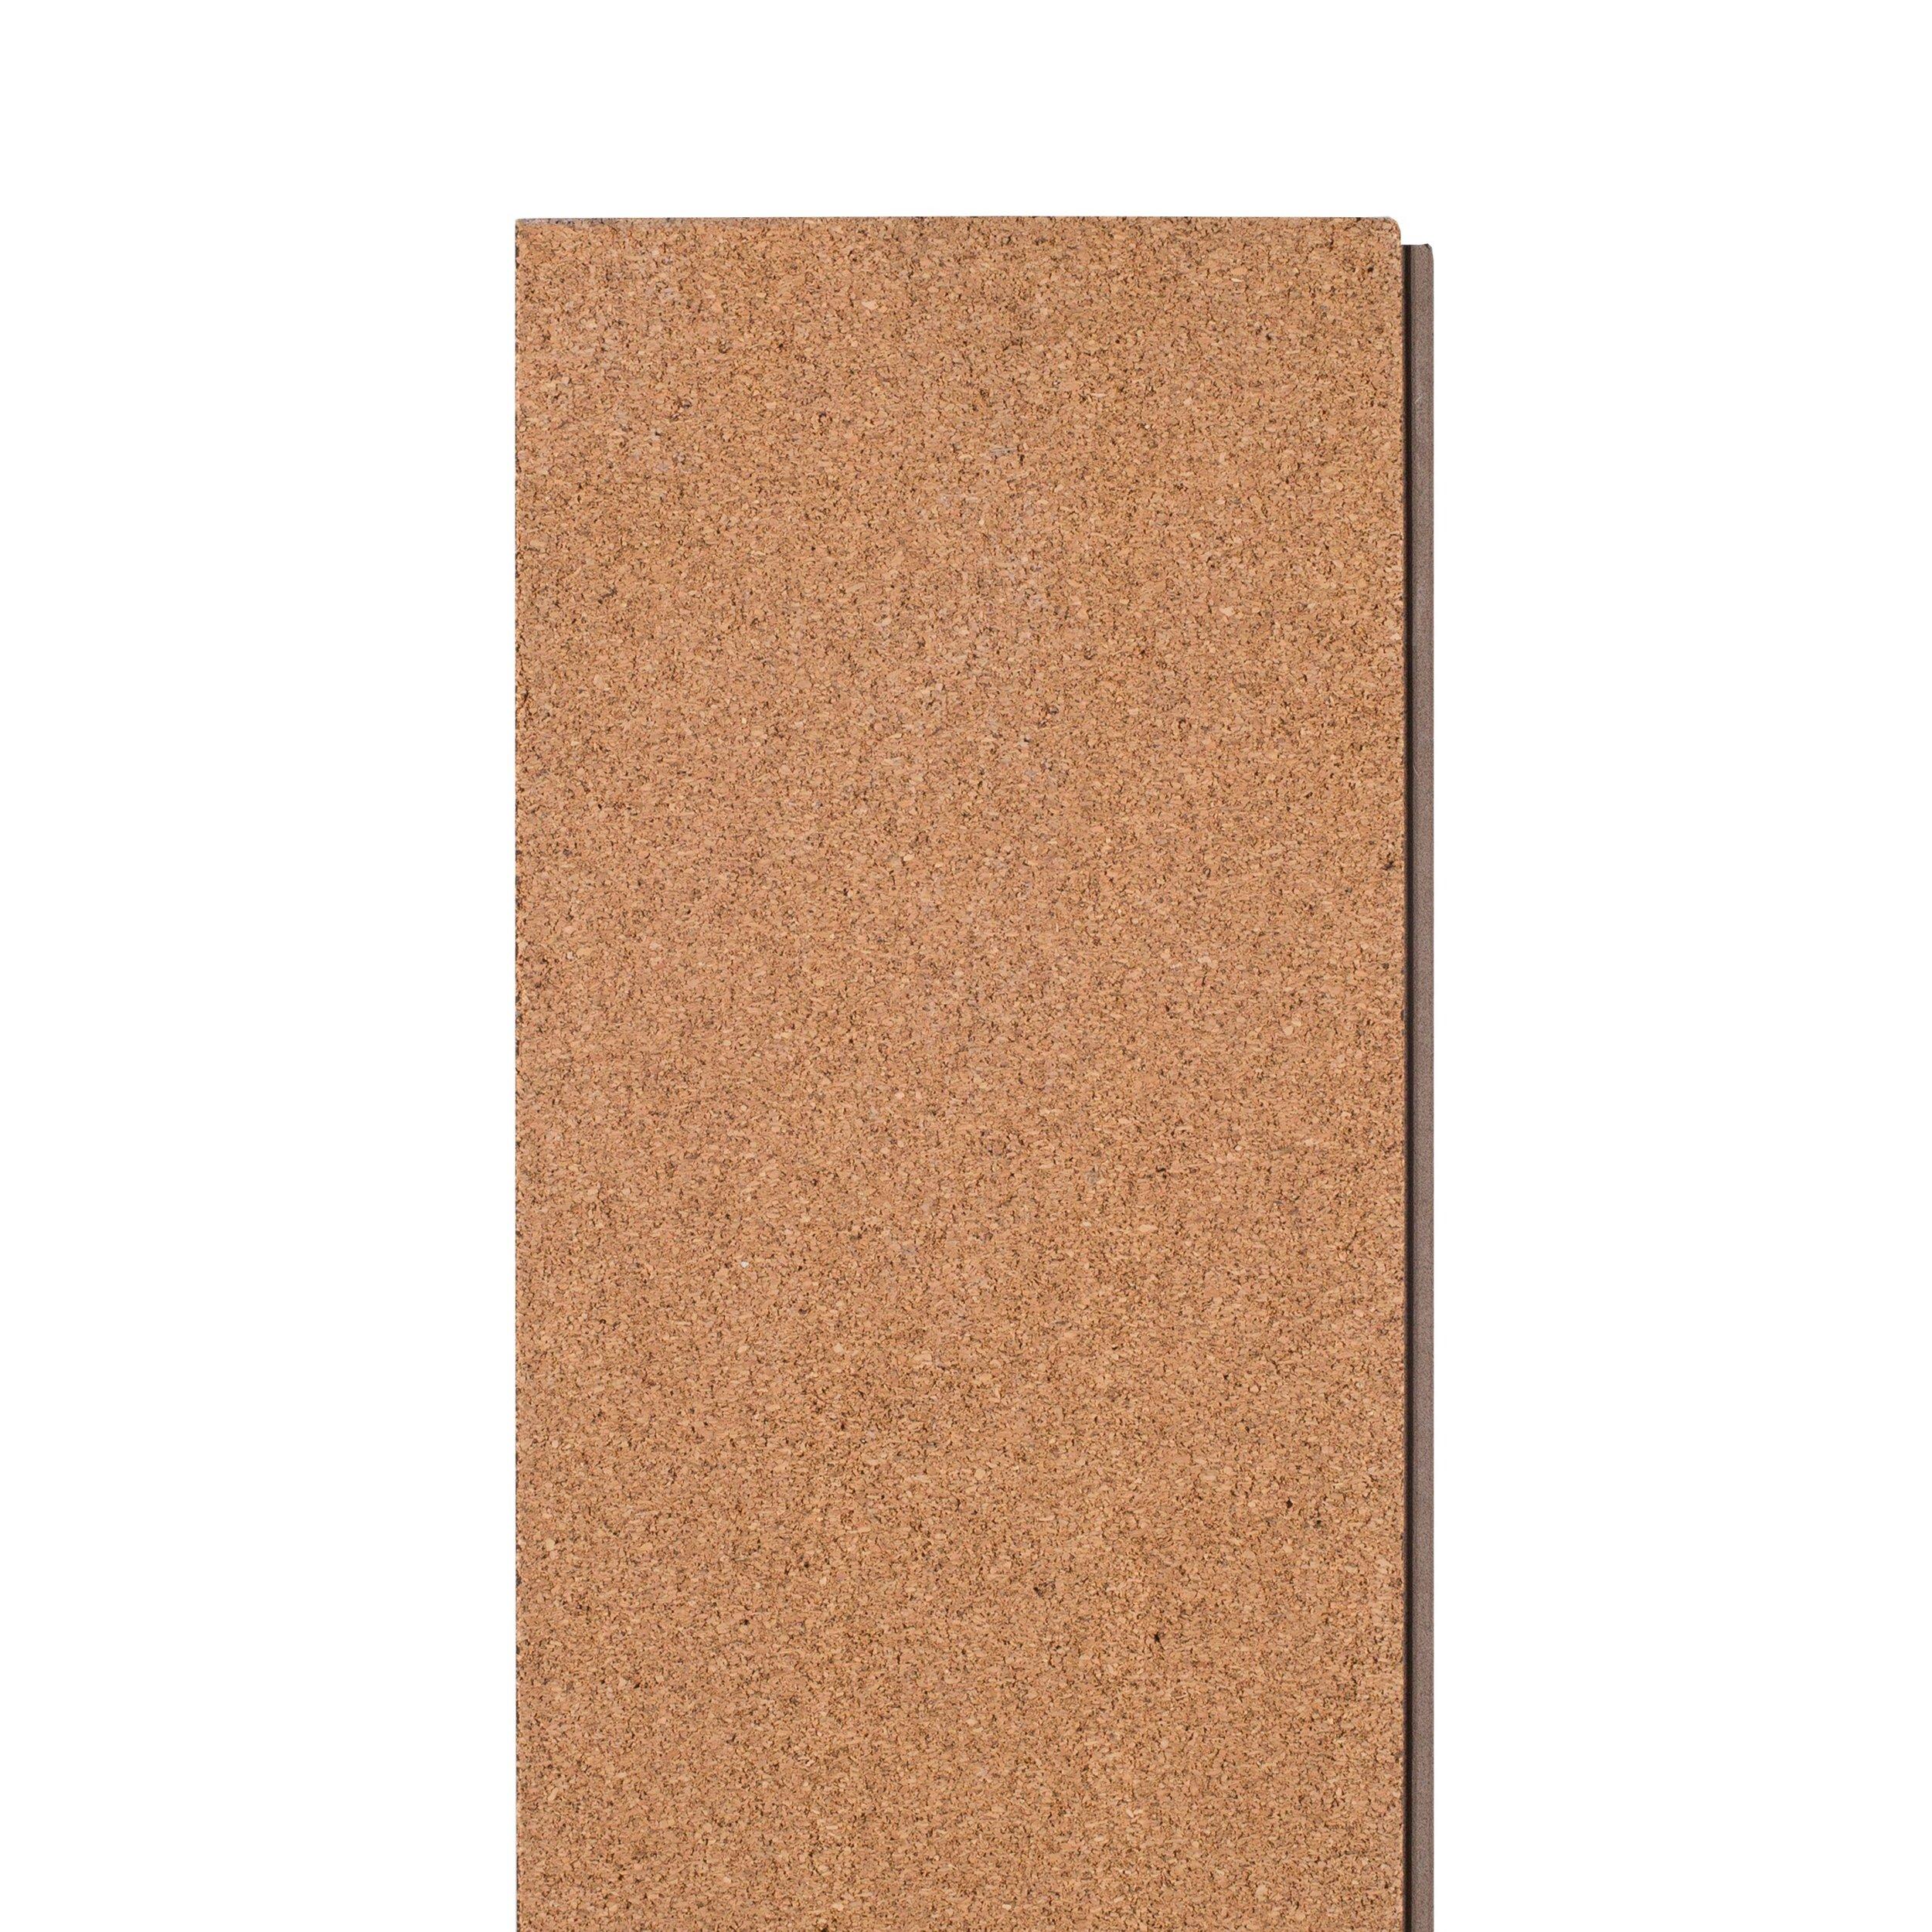 Maison Chablis Rigid Core Luxury Vinyl Plank - Cork Back